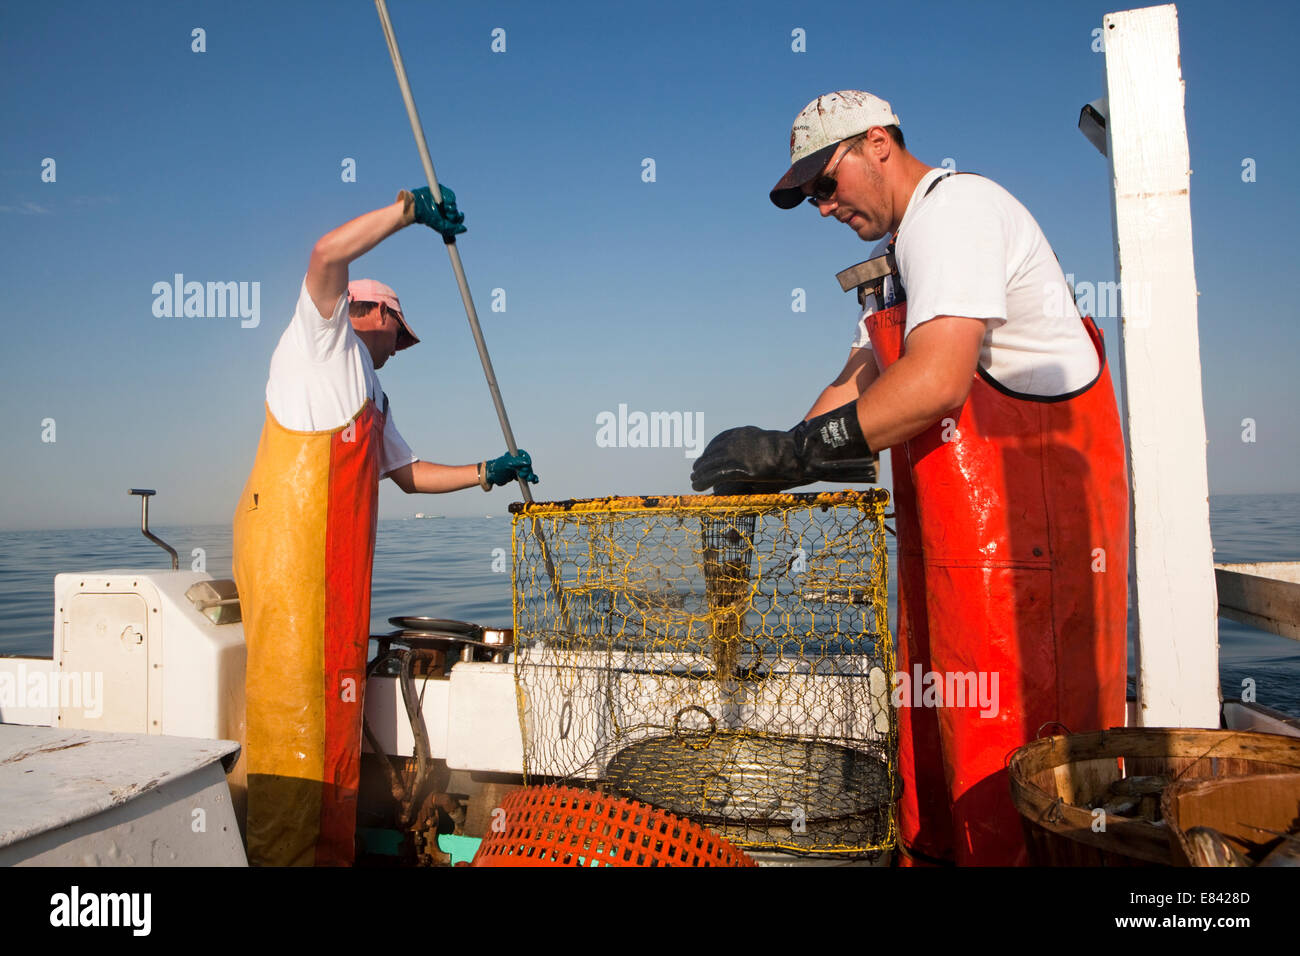 Fisherman preparing crab trap on fishing boat, Chesapeake Bay